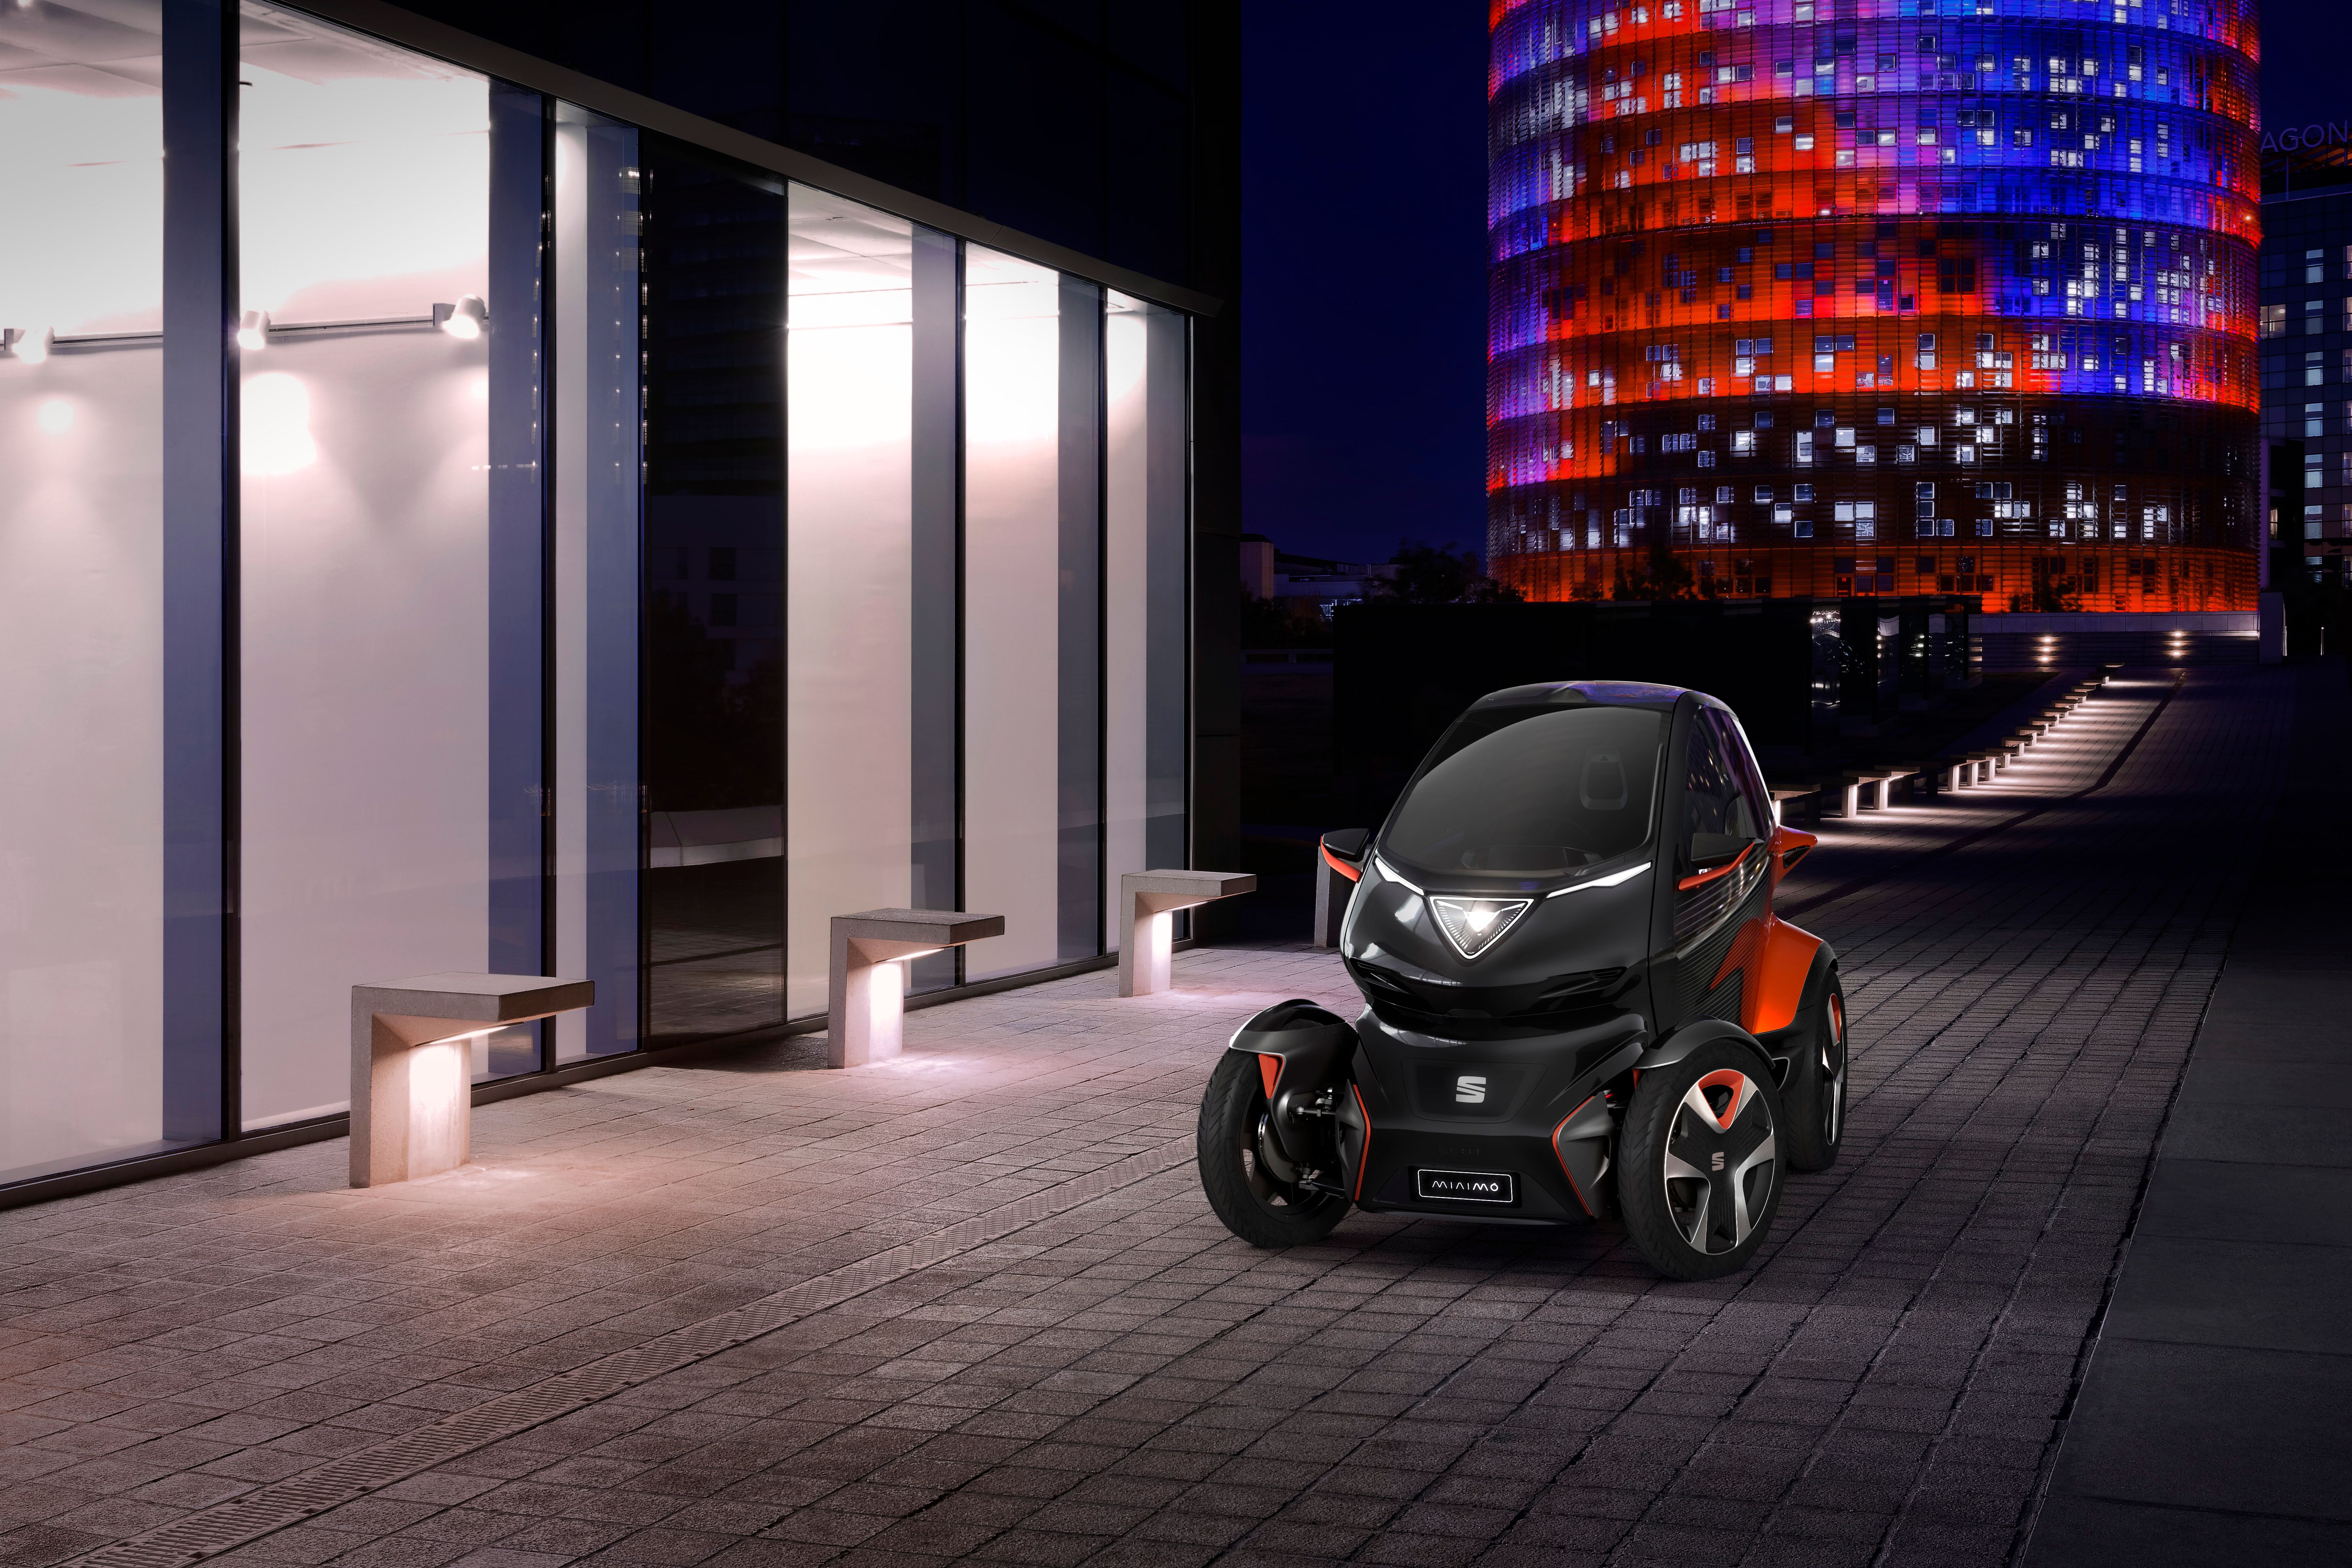 2019 SEAT Minimo Concept